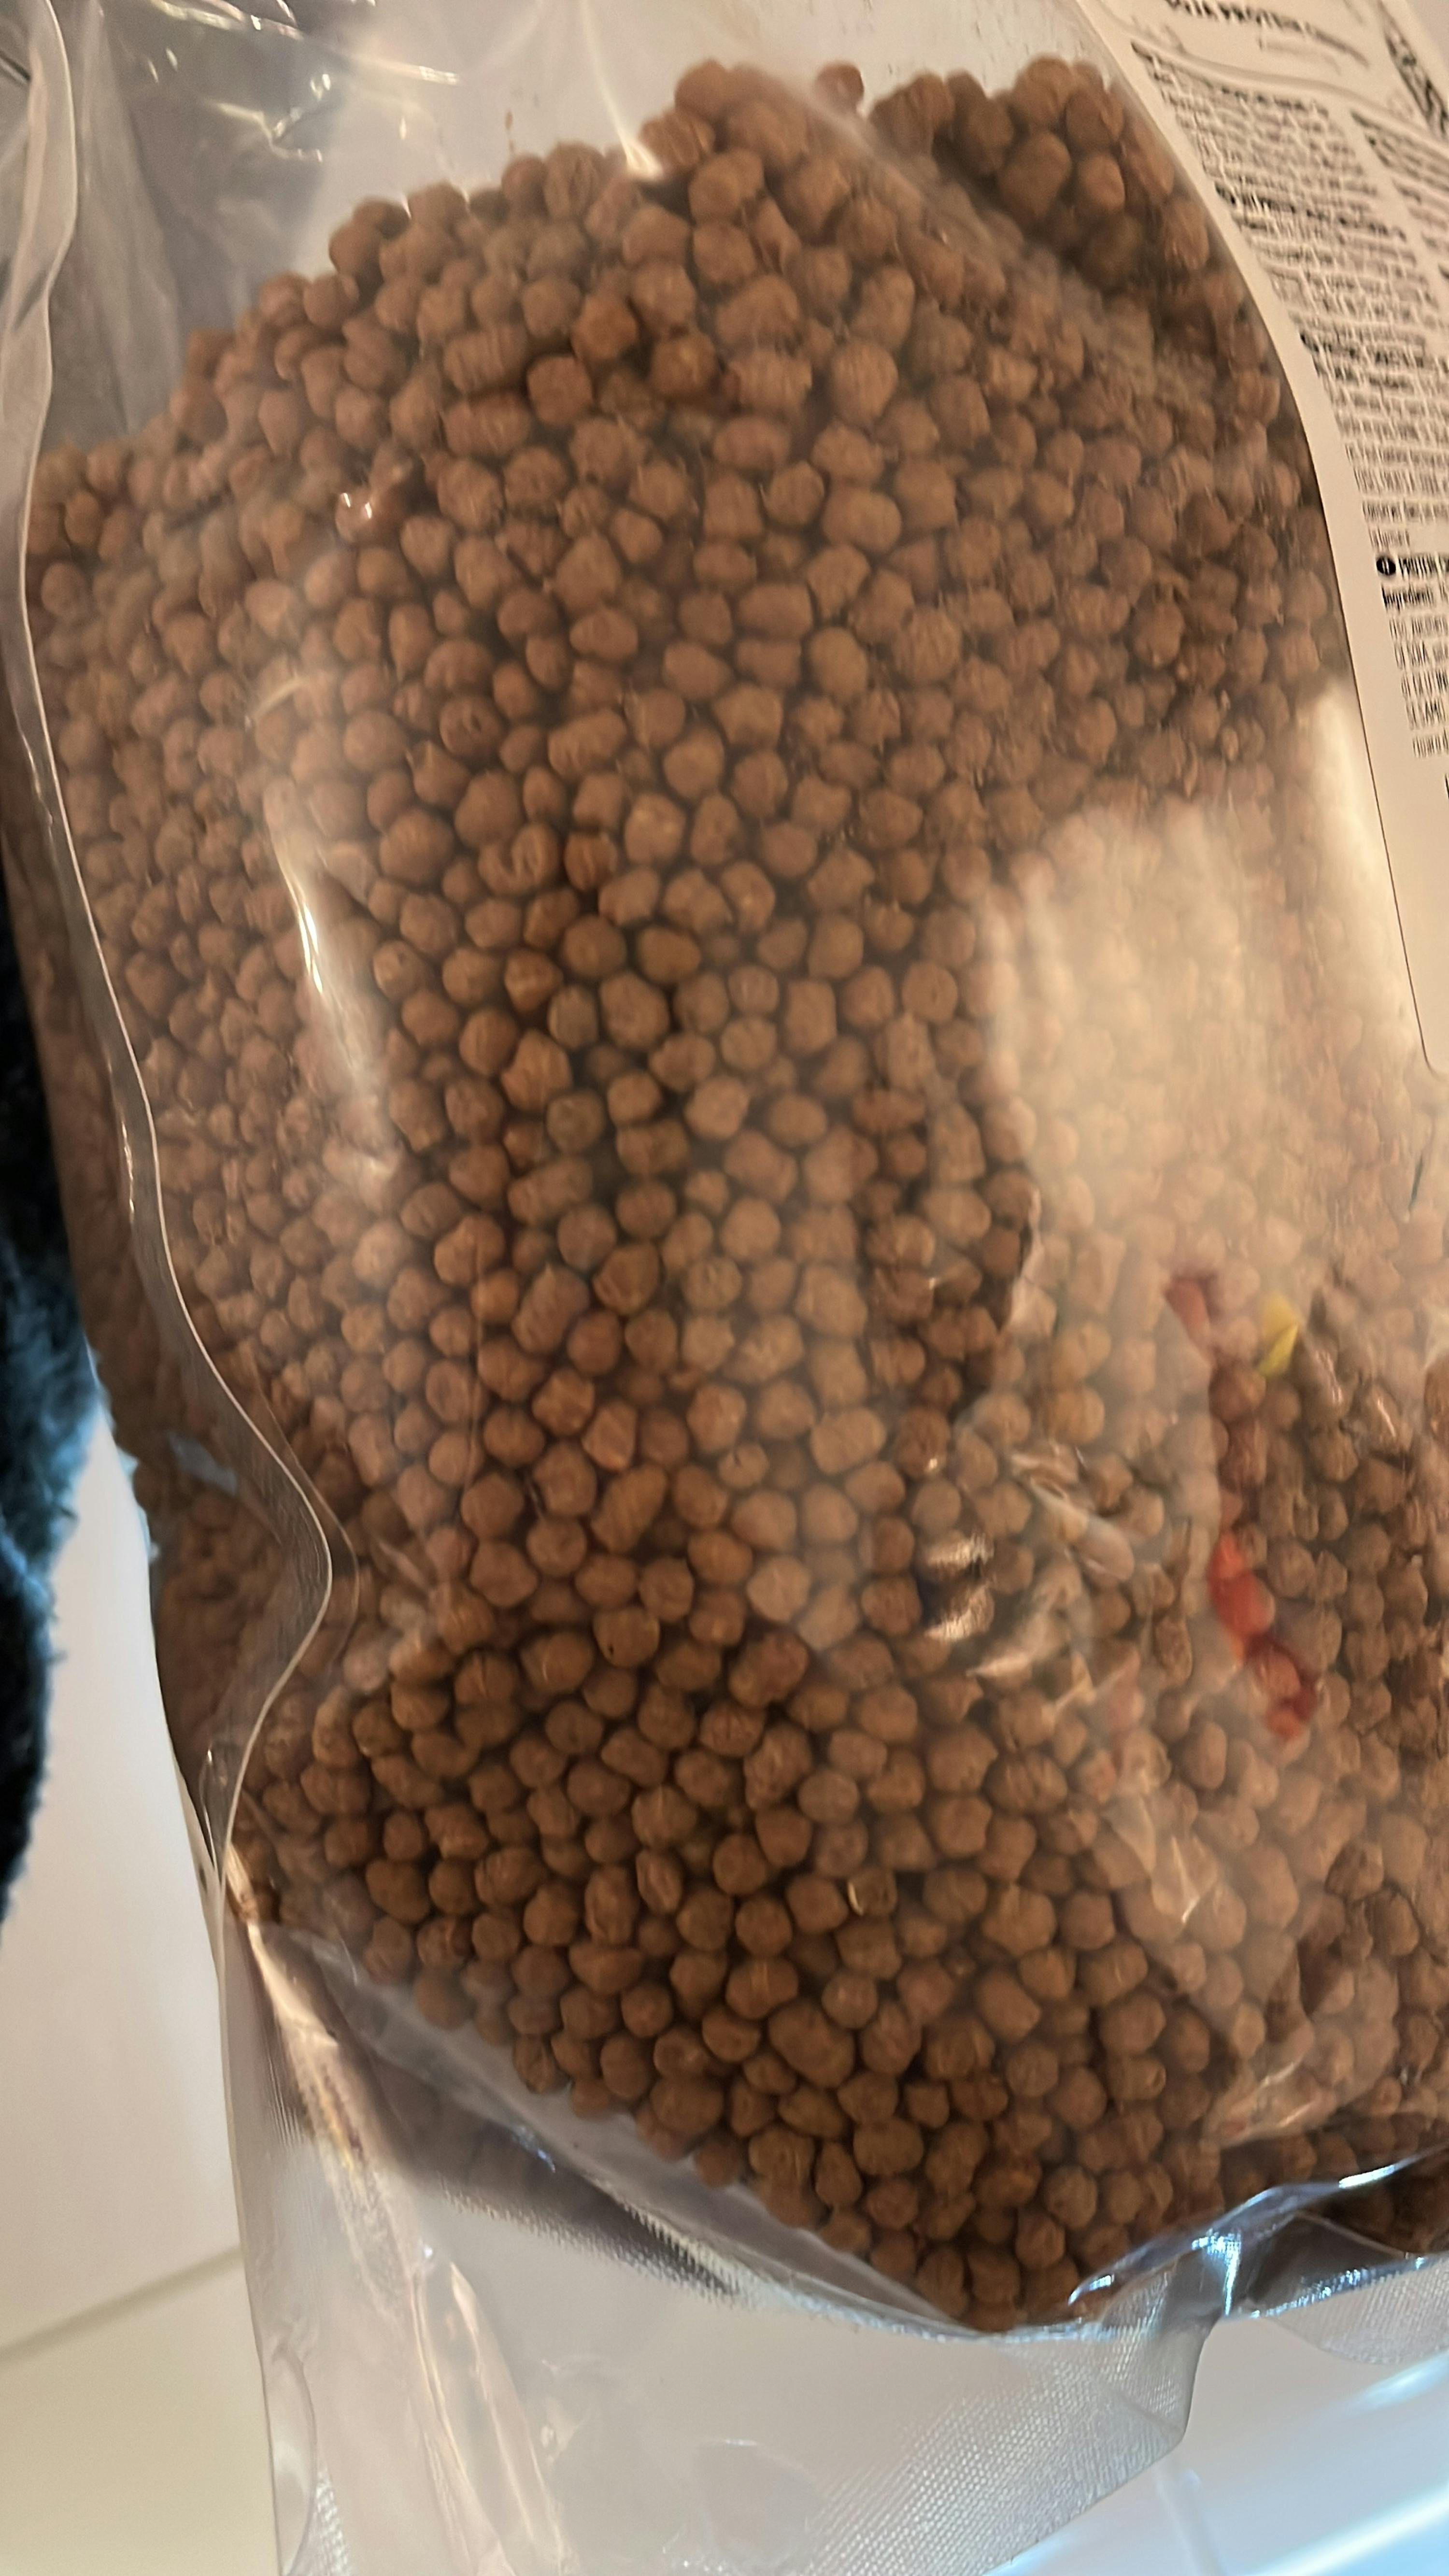 KoRo - Soja crispies (58 %) au cacao 1 kg : : Epicerie